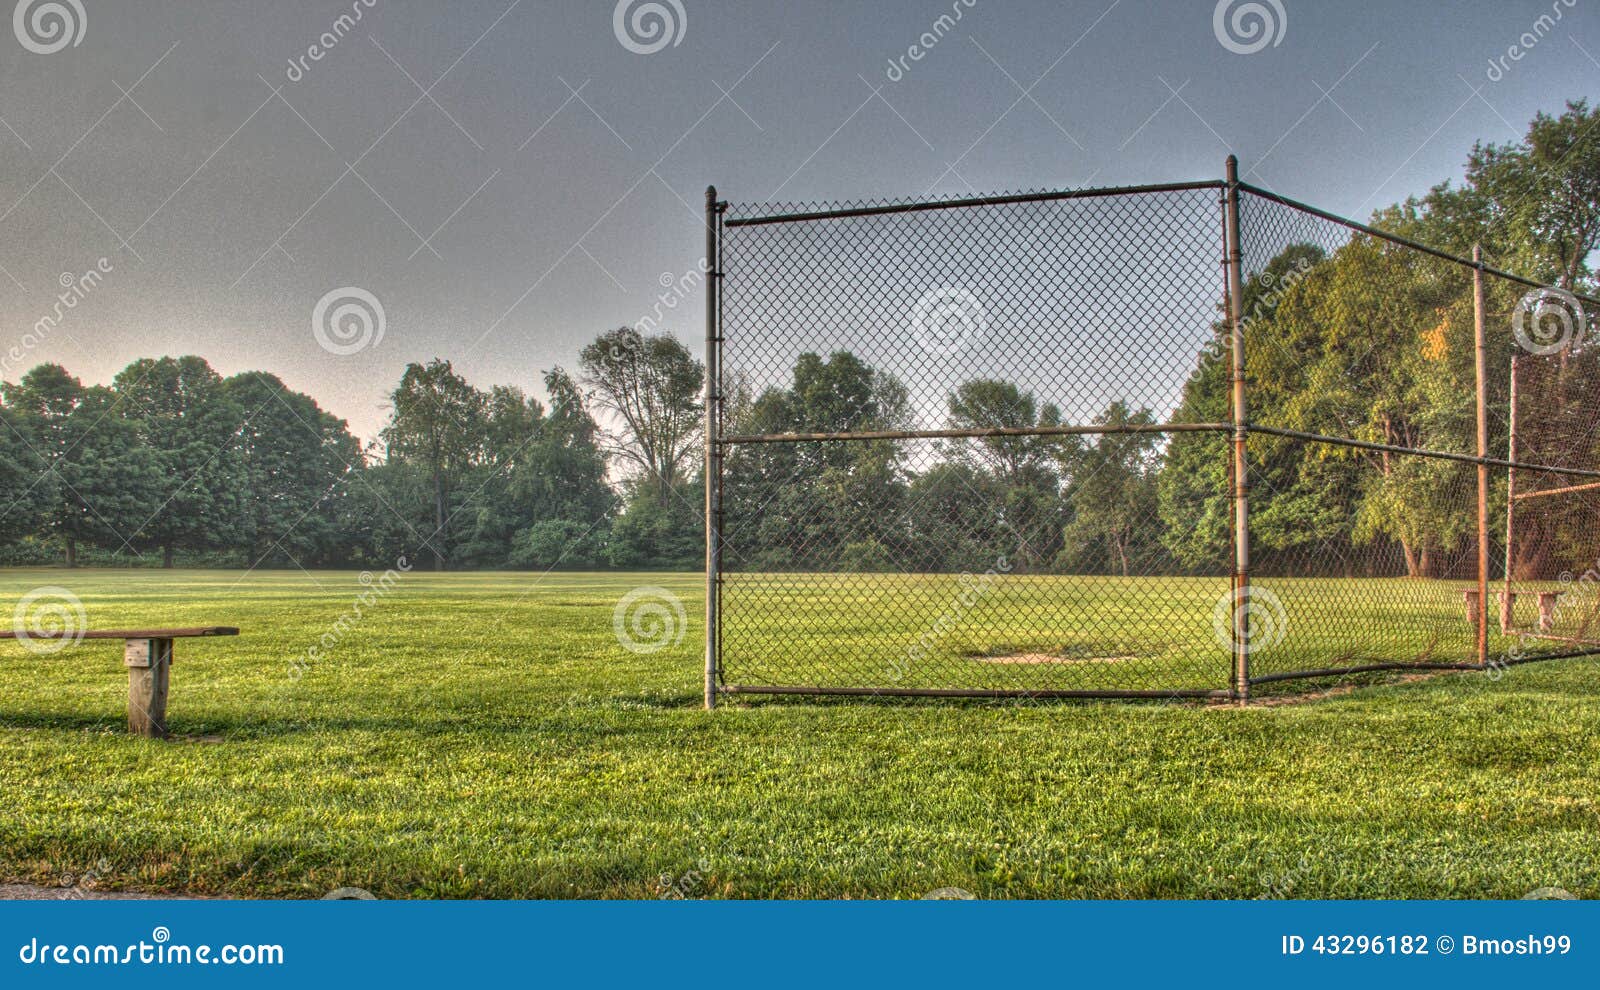 youth baseball or softball field